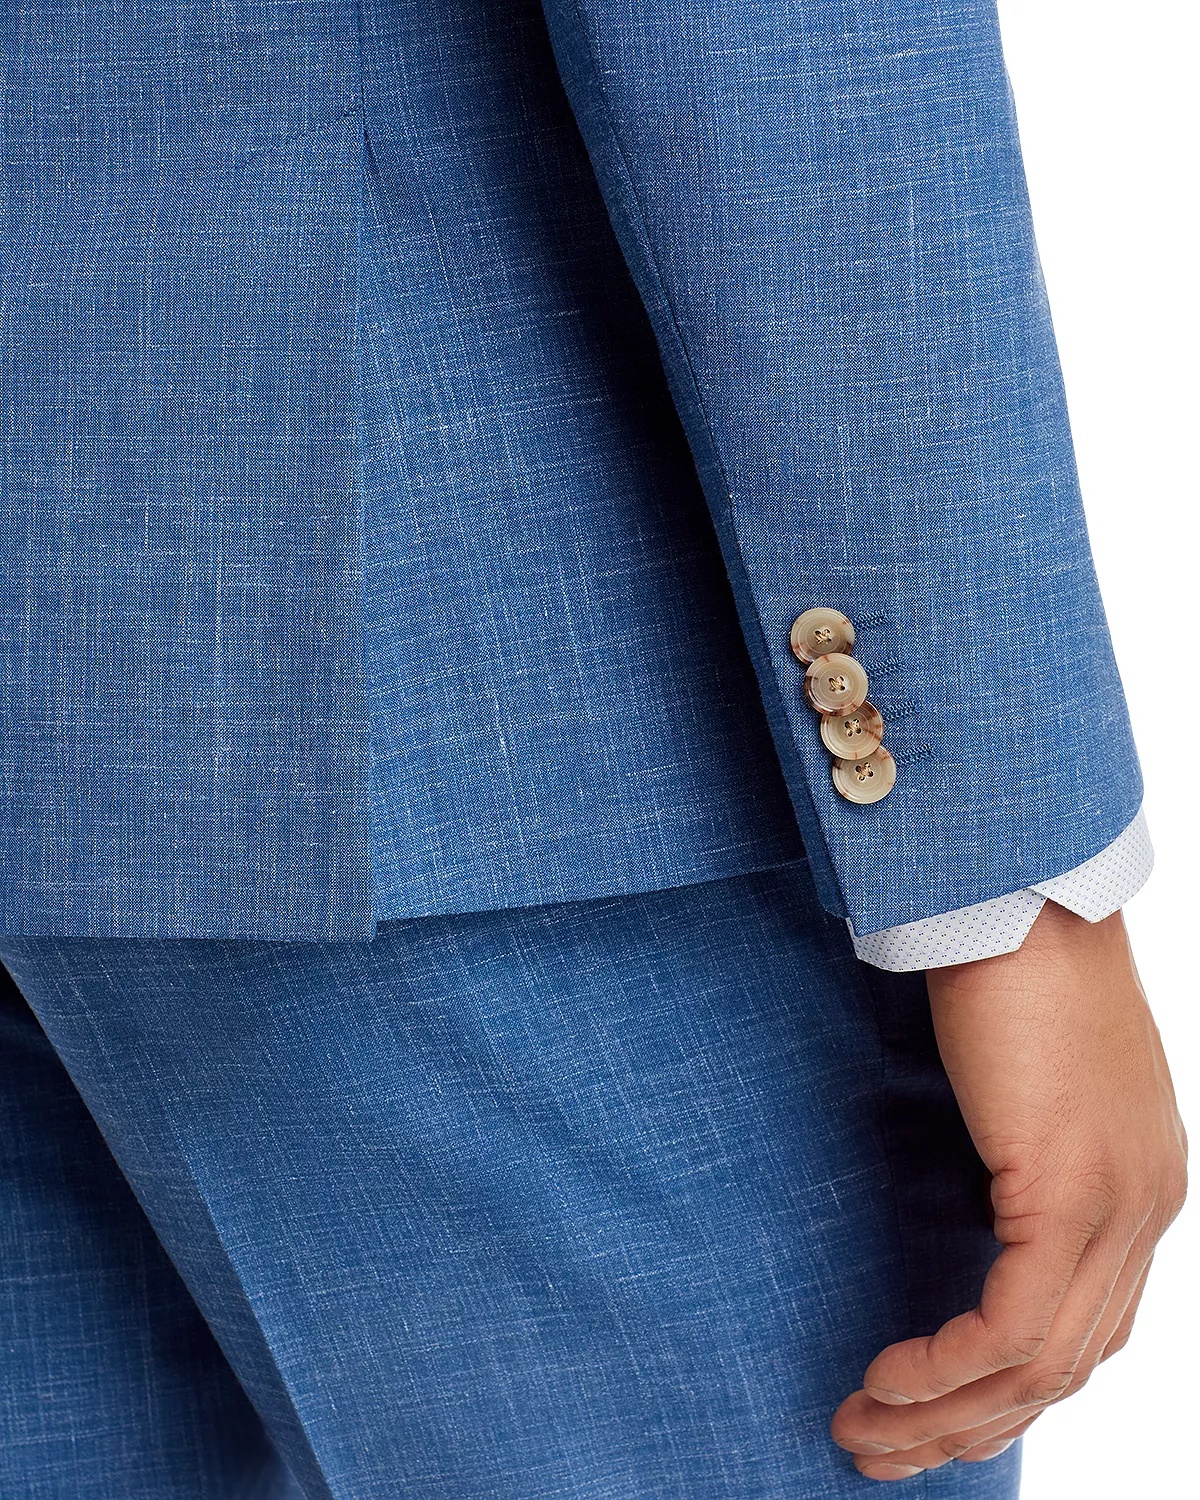 Soho Wool & Linen Slub Weave Extra Slim Fit Suit - 6